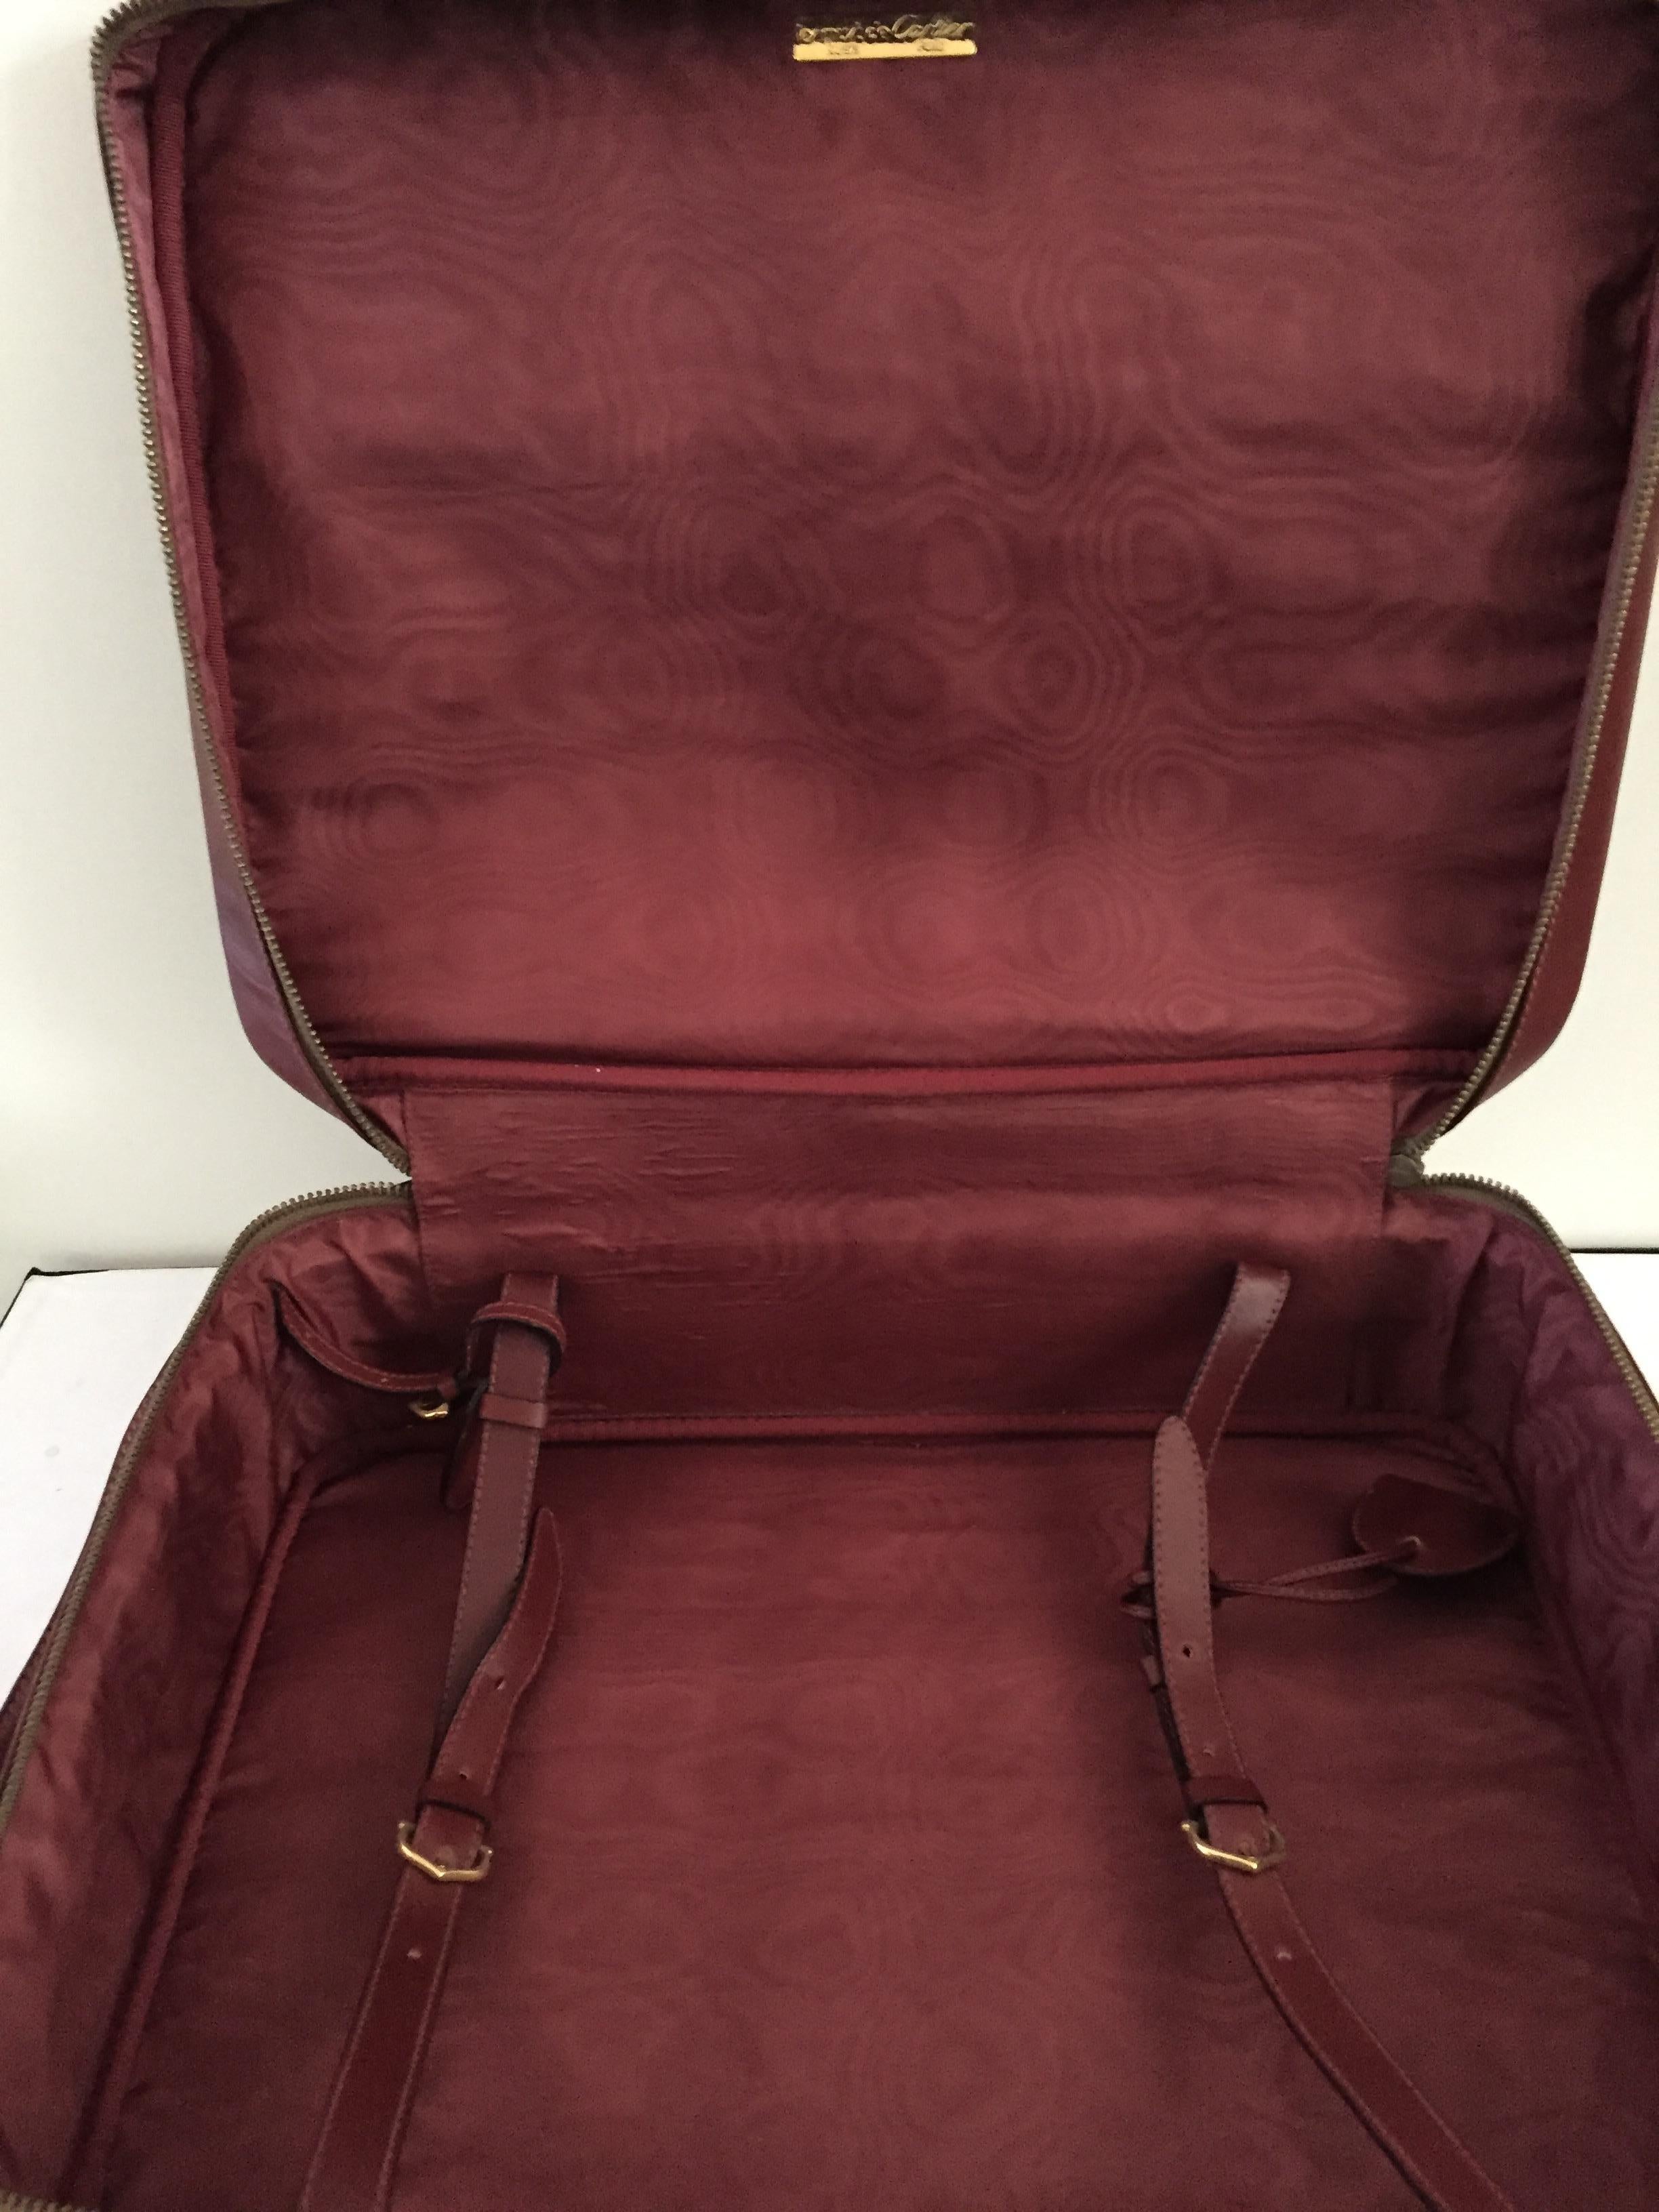 Cartier Les Must de Cartier Burgundy Leather Travel Overnight Suitcase / Luggage 2